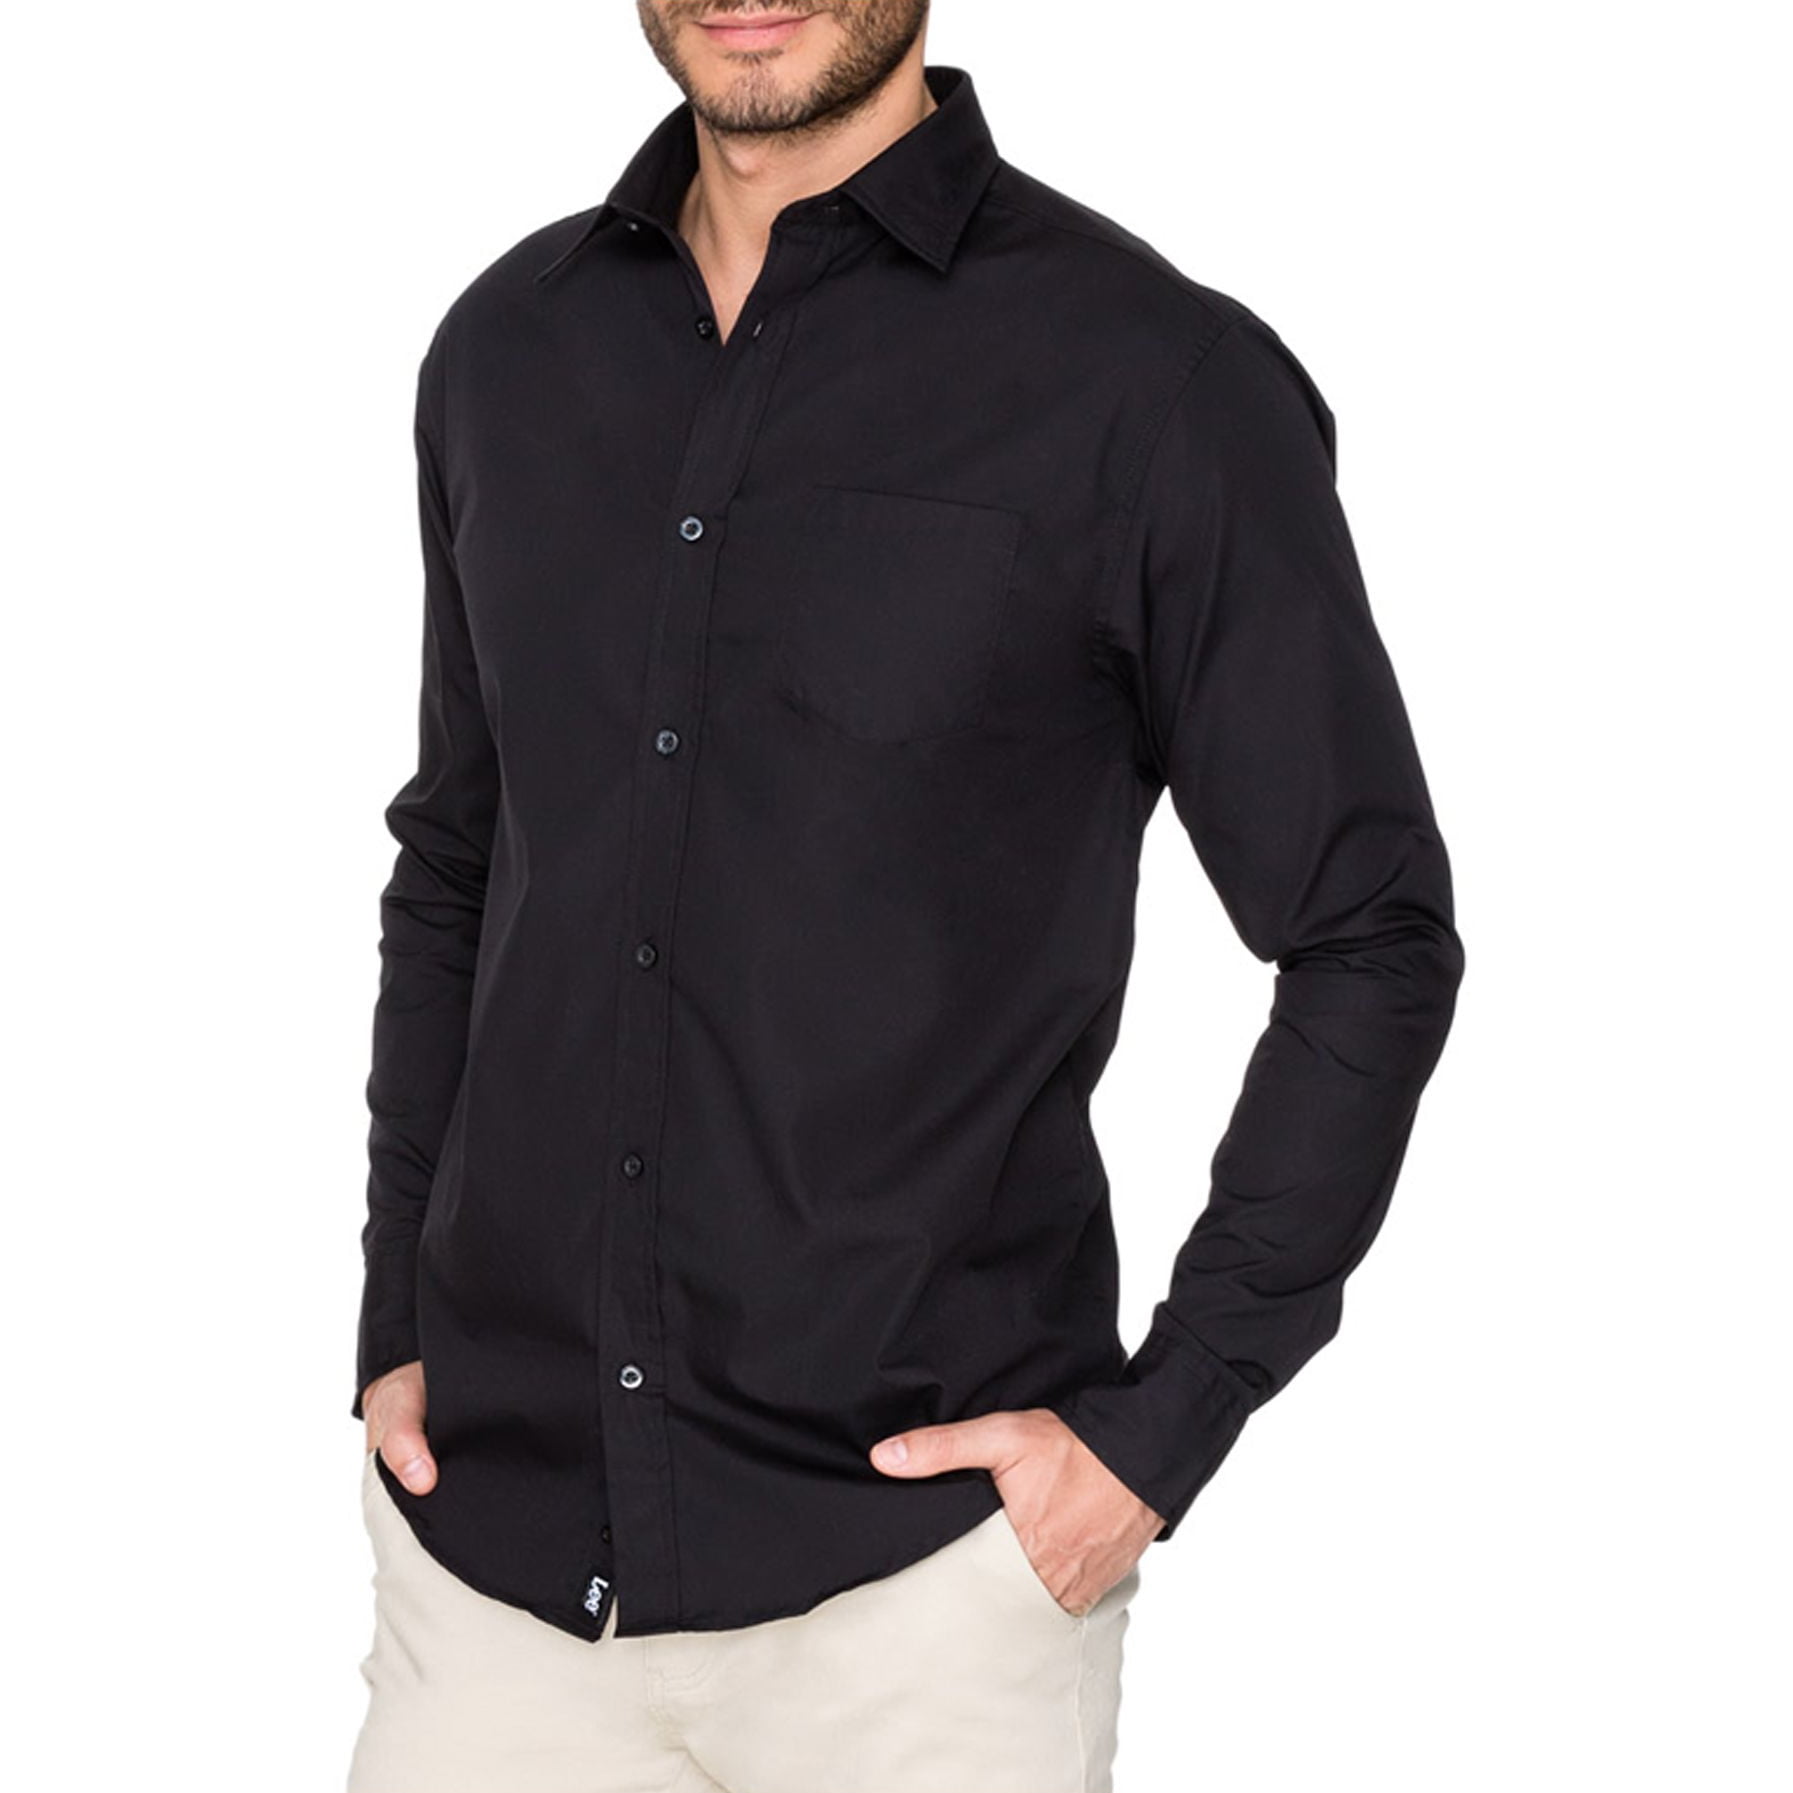 Lee Uniforms Young Men's Long Sleeve Dress Shirt - Walmart.com